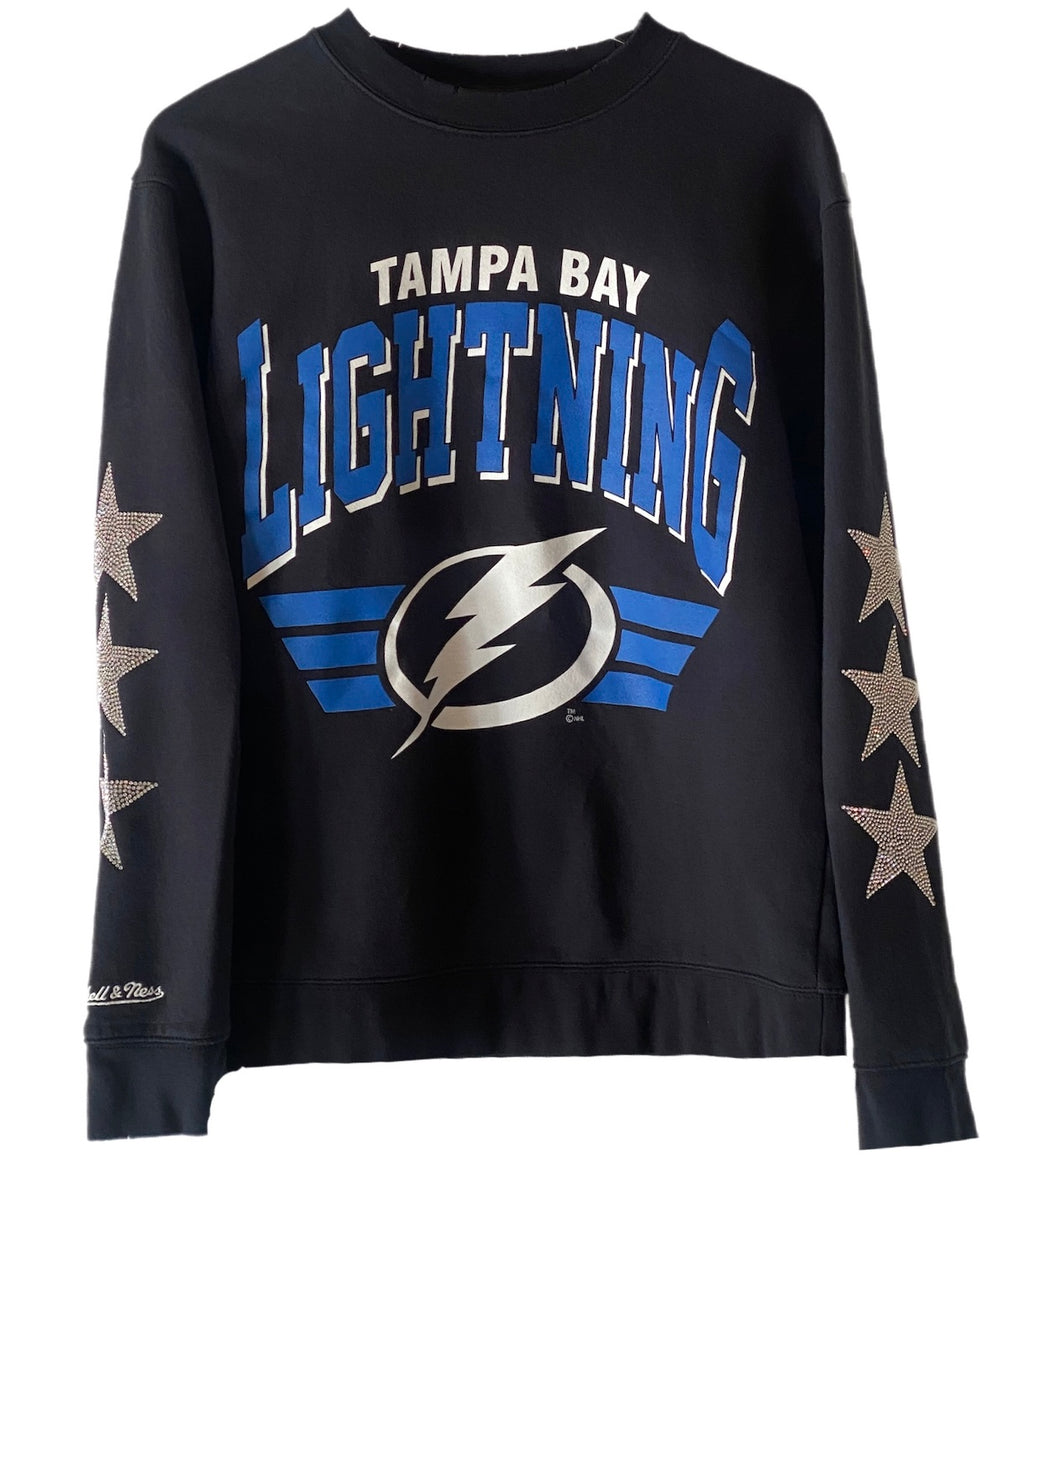 Tampa Bay Lightning, NHL One of a KIND Vintage Sweatshirt with Three Crystal Star Design